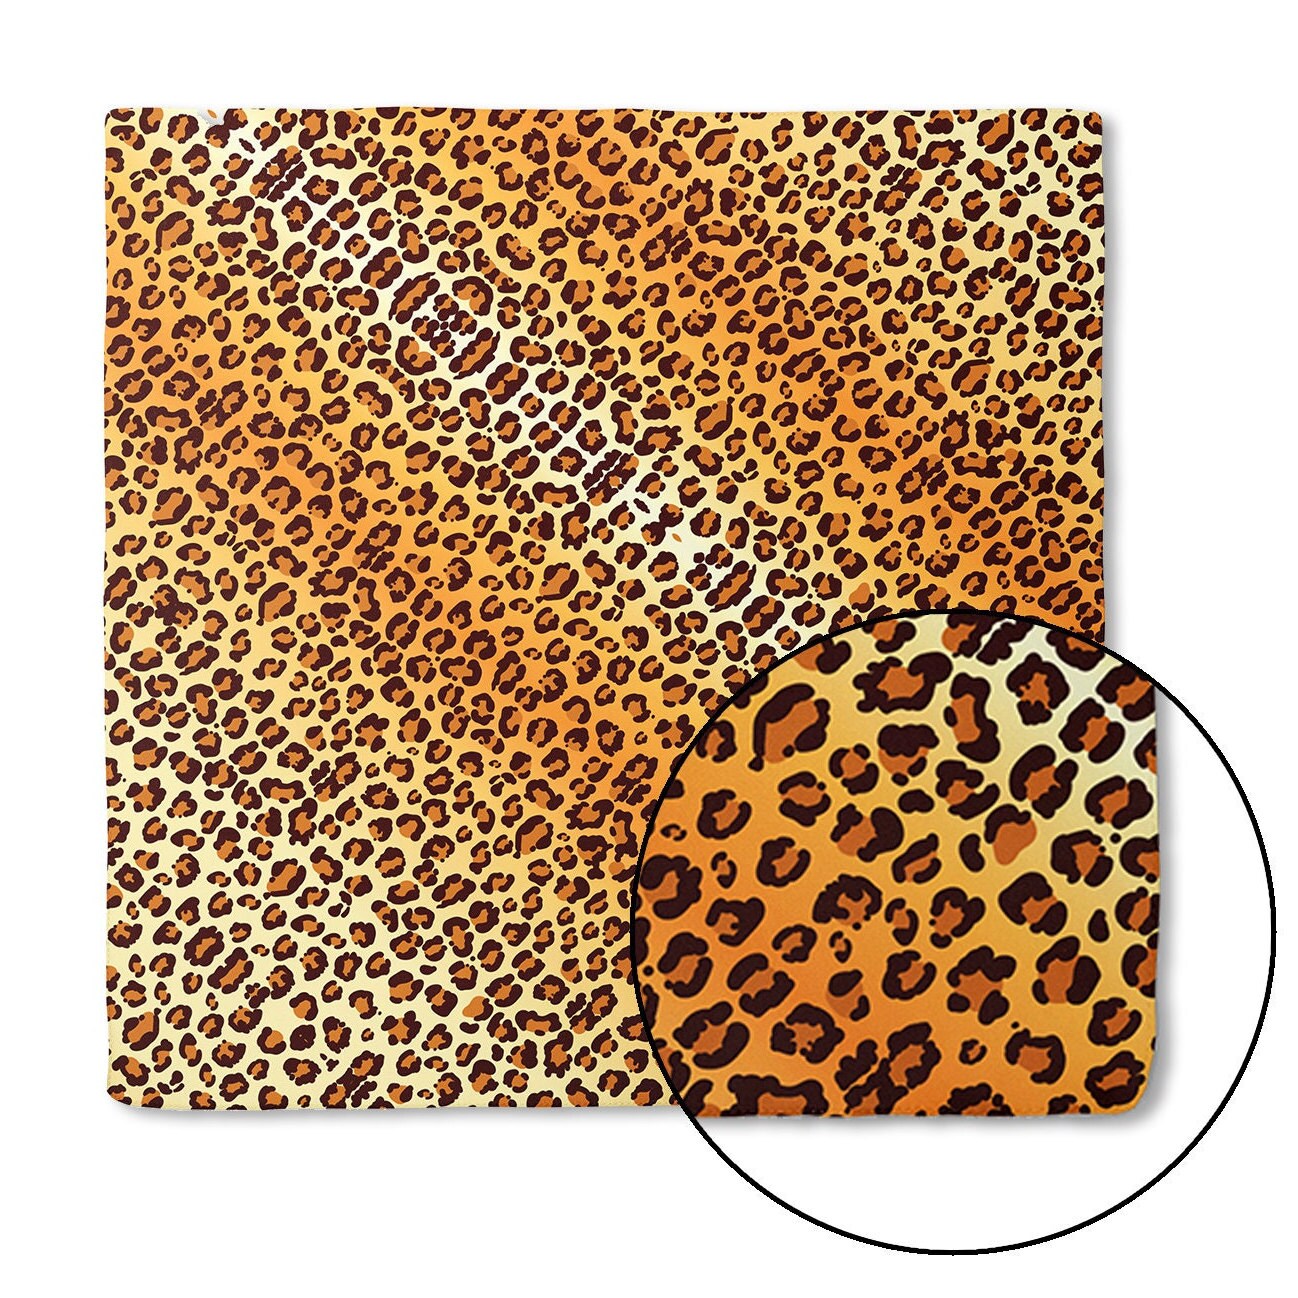 Leopard Print Bandana or Scarf, Jungle Animal Print Head Wrap, Turban or Sarong